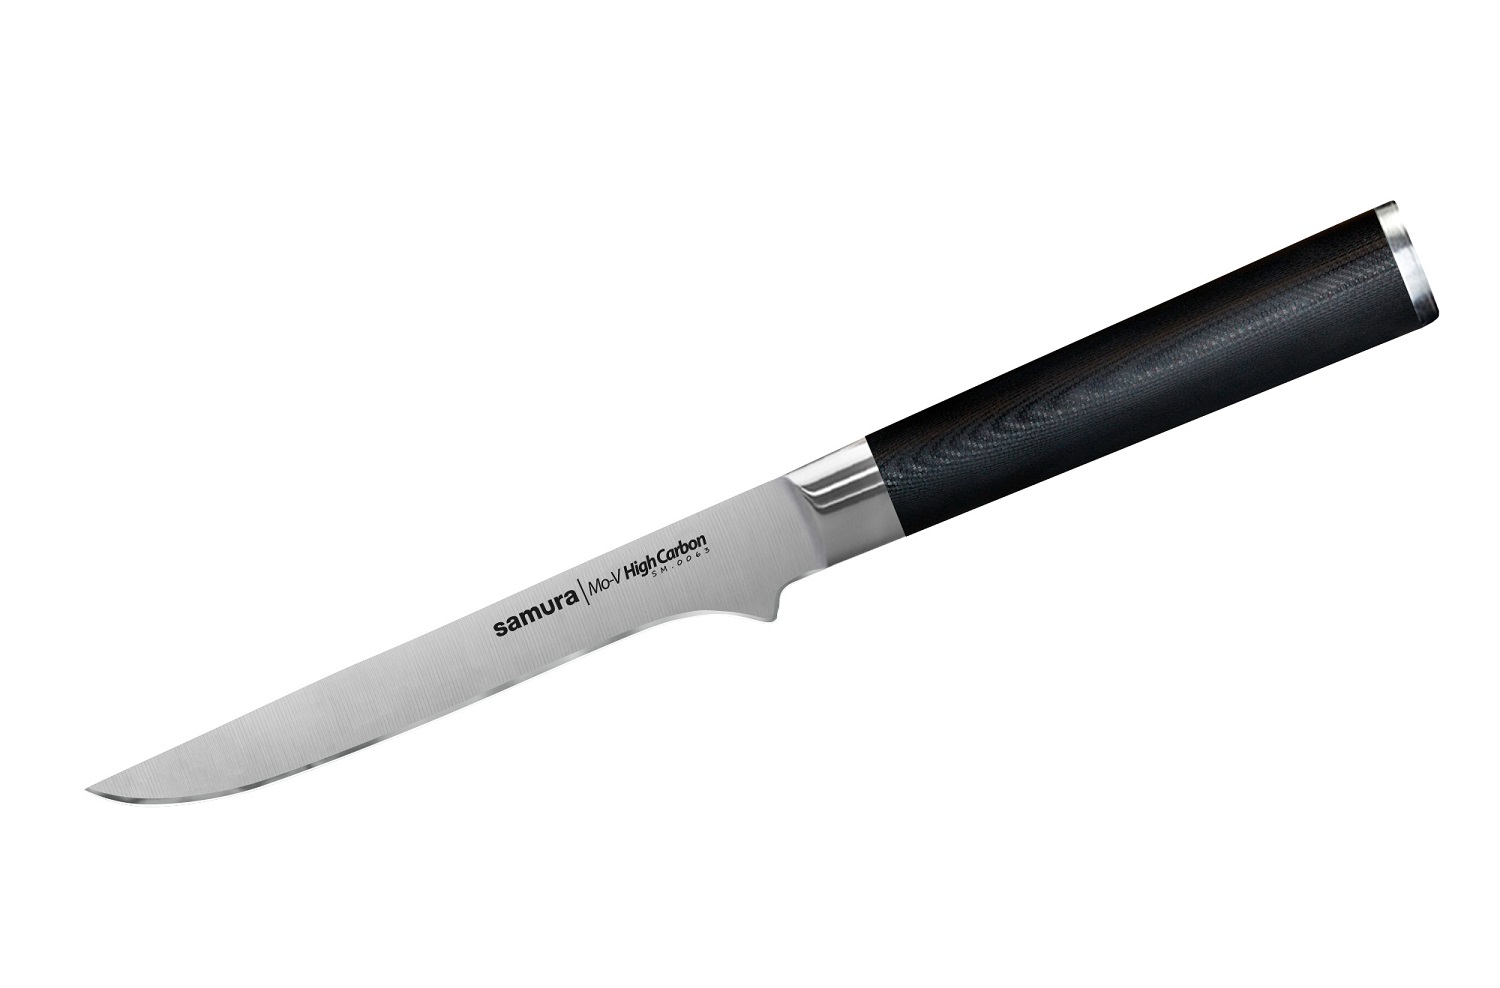 Нож Samura обвалочный Mo-V, 16,5 см, G-10 нож для нарезки mo v 23 см sm 0045 k samura